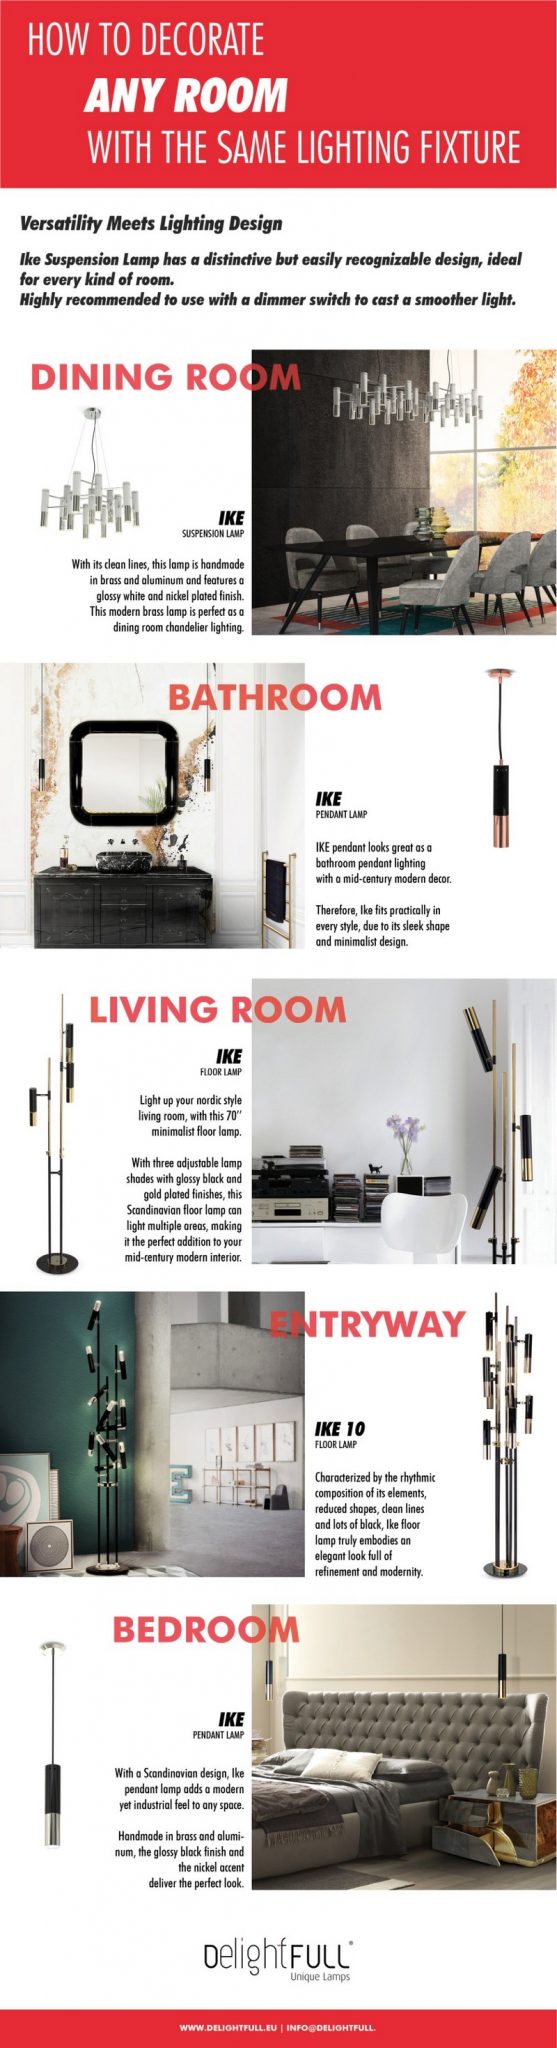 Interior Design Tips - Meet DelightFULL's Stunning Ike Lamp Designs 8